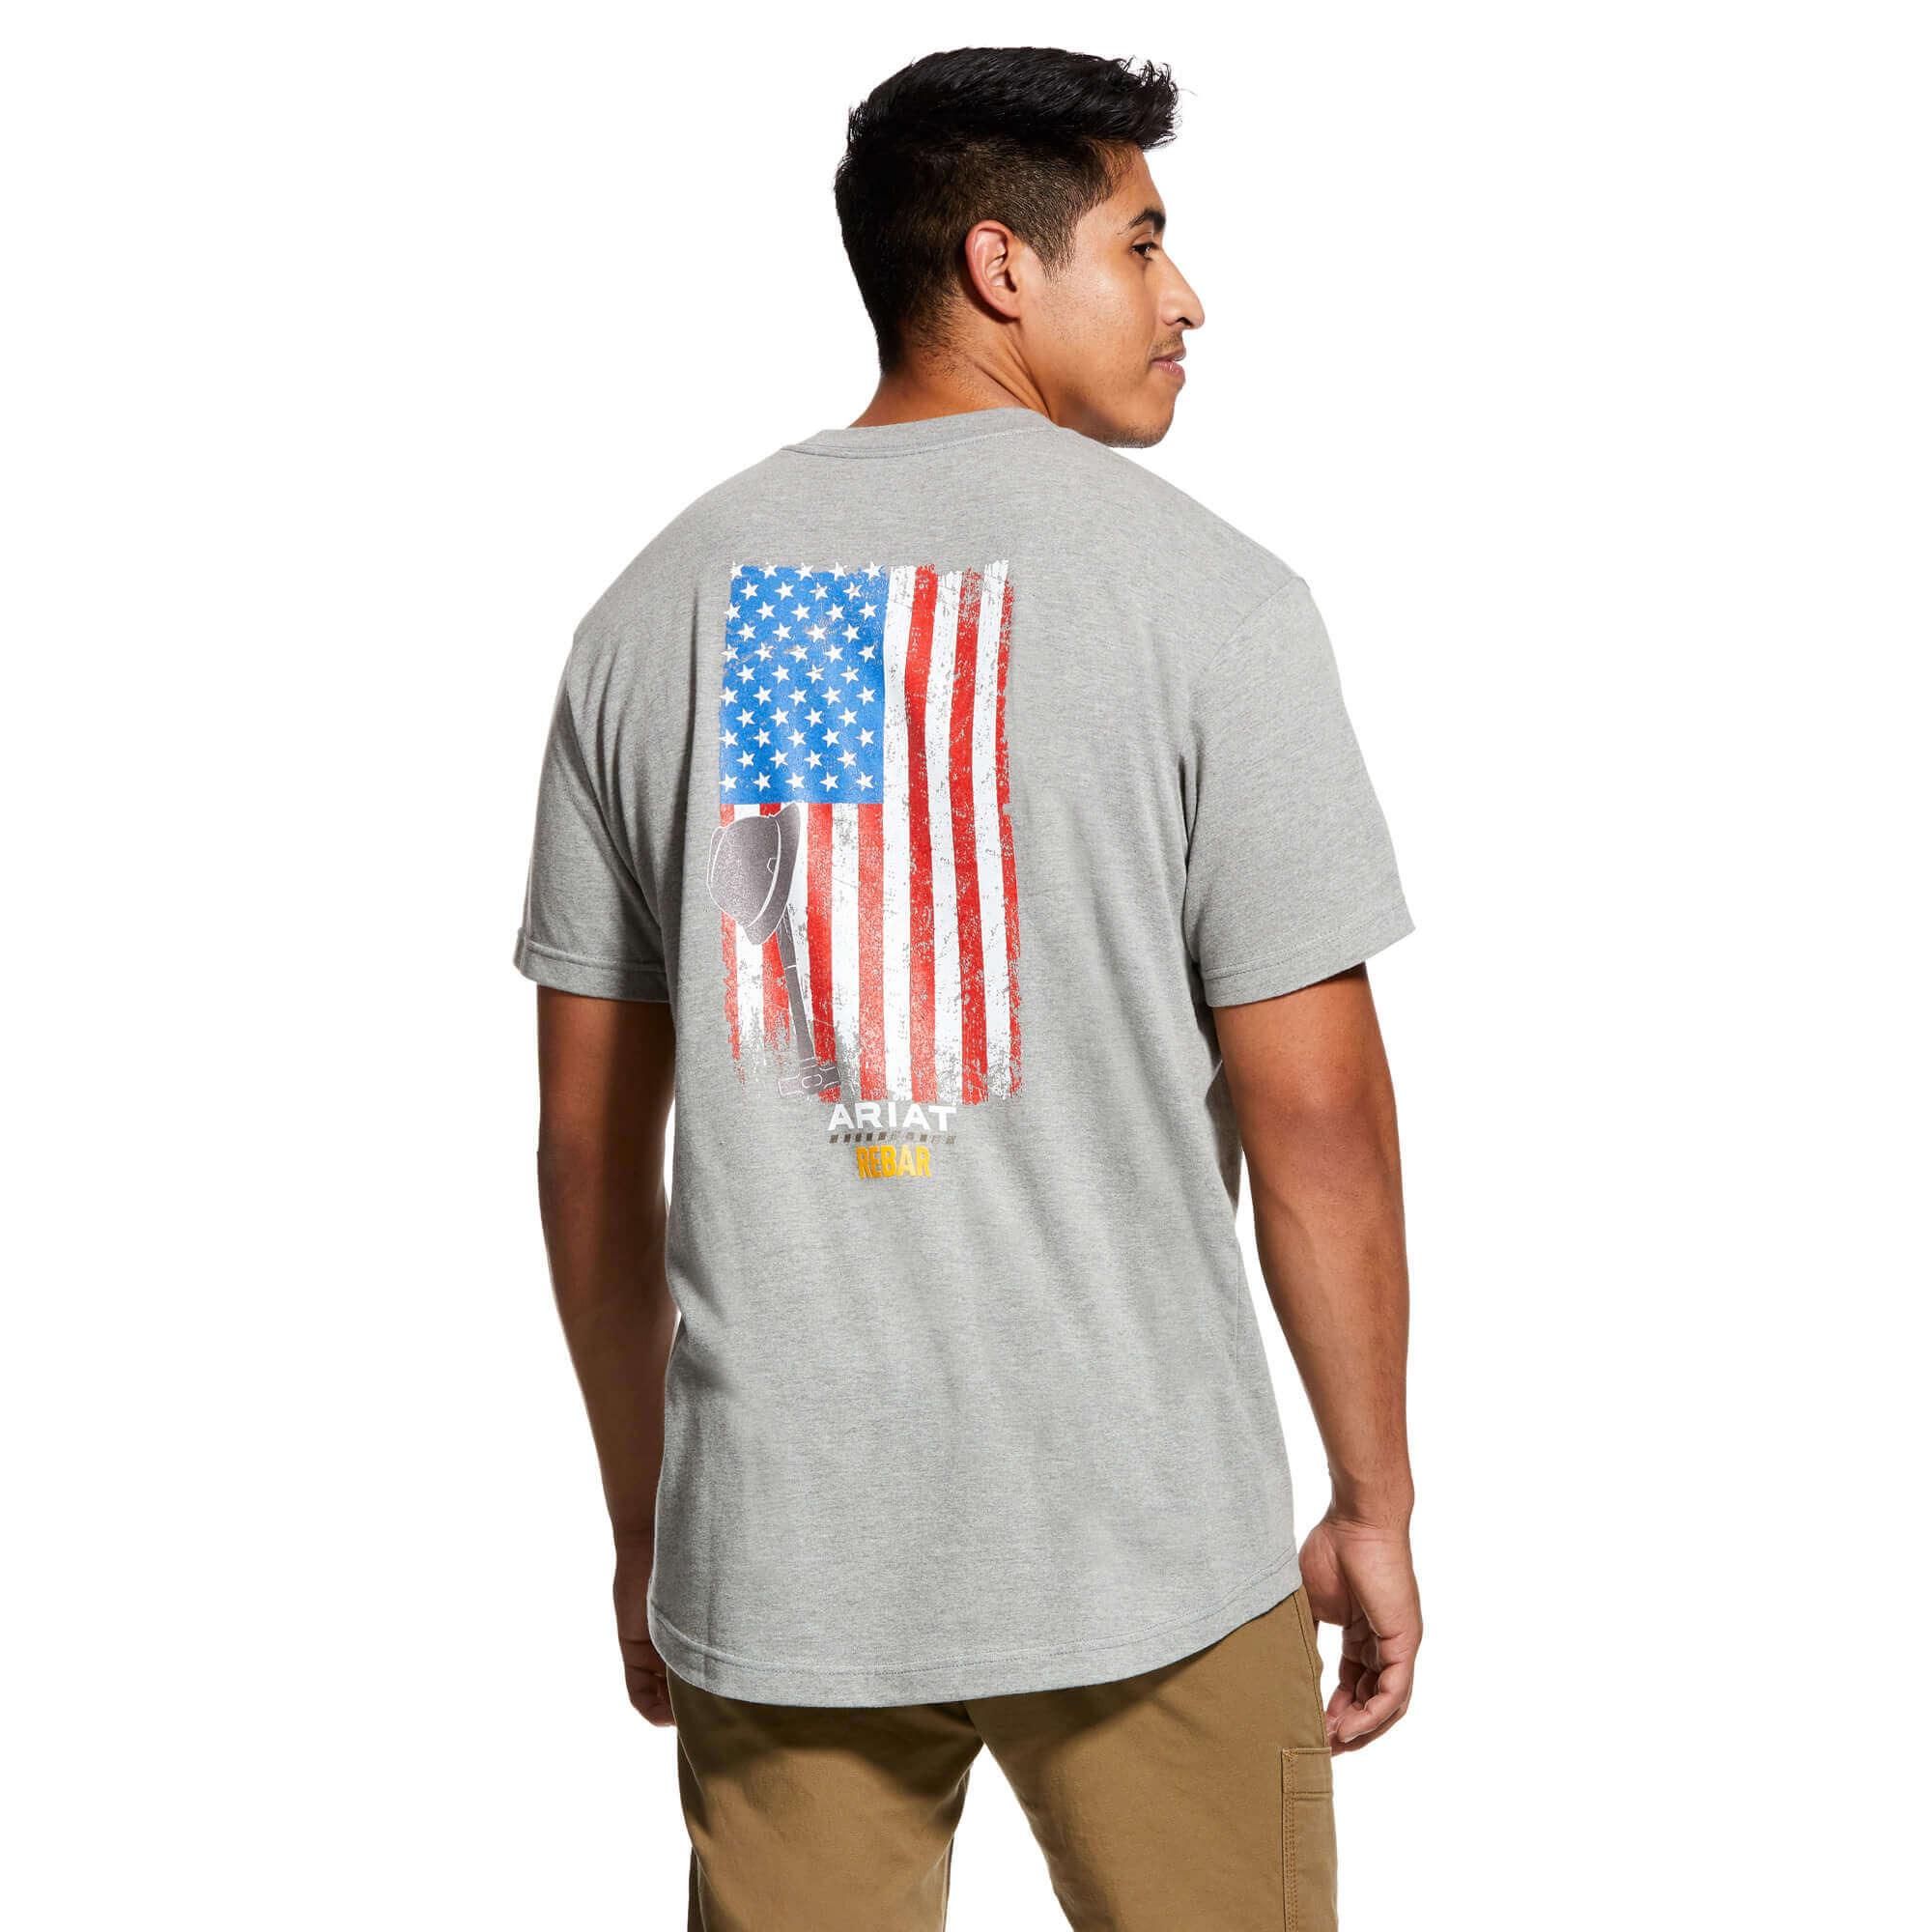 Ariat Rebar Cotton Strong American Grit T-Shirt